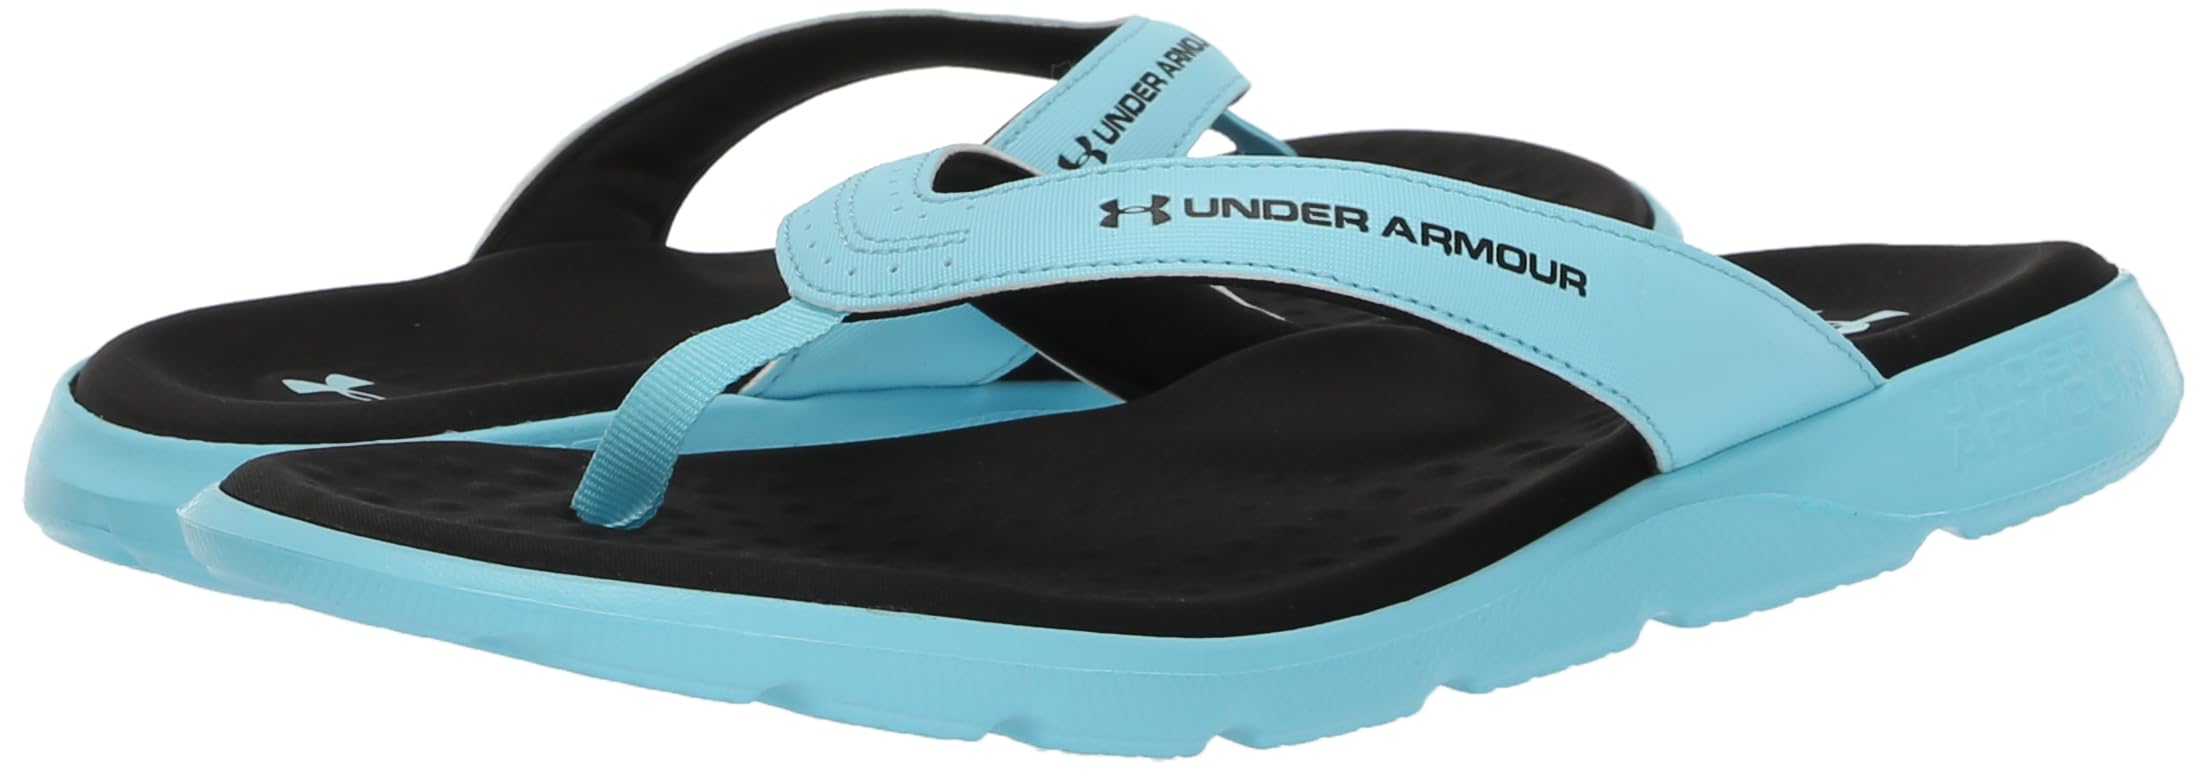 Under Armour Women's Ignite Pro Marbella Flip Flop Slide Sandal